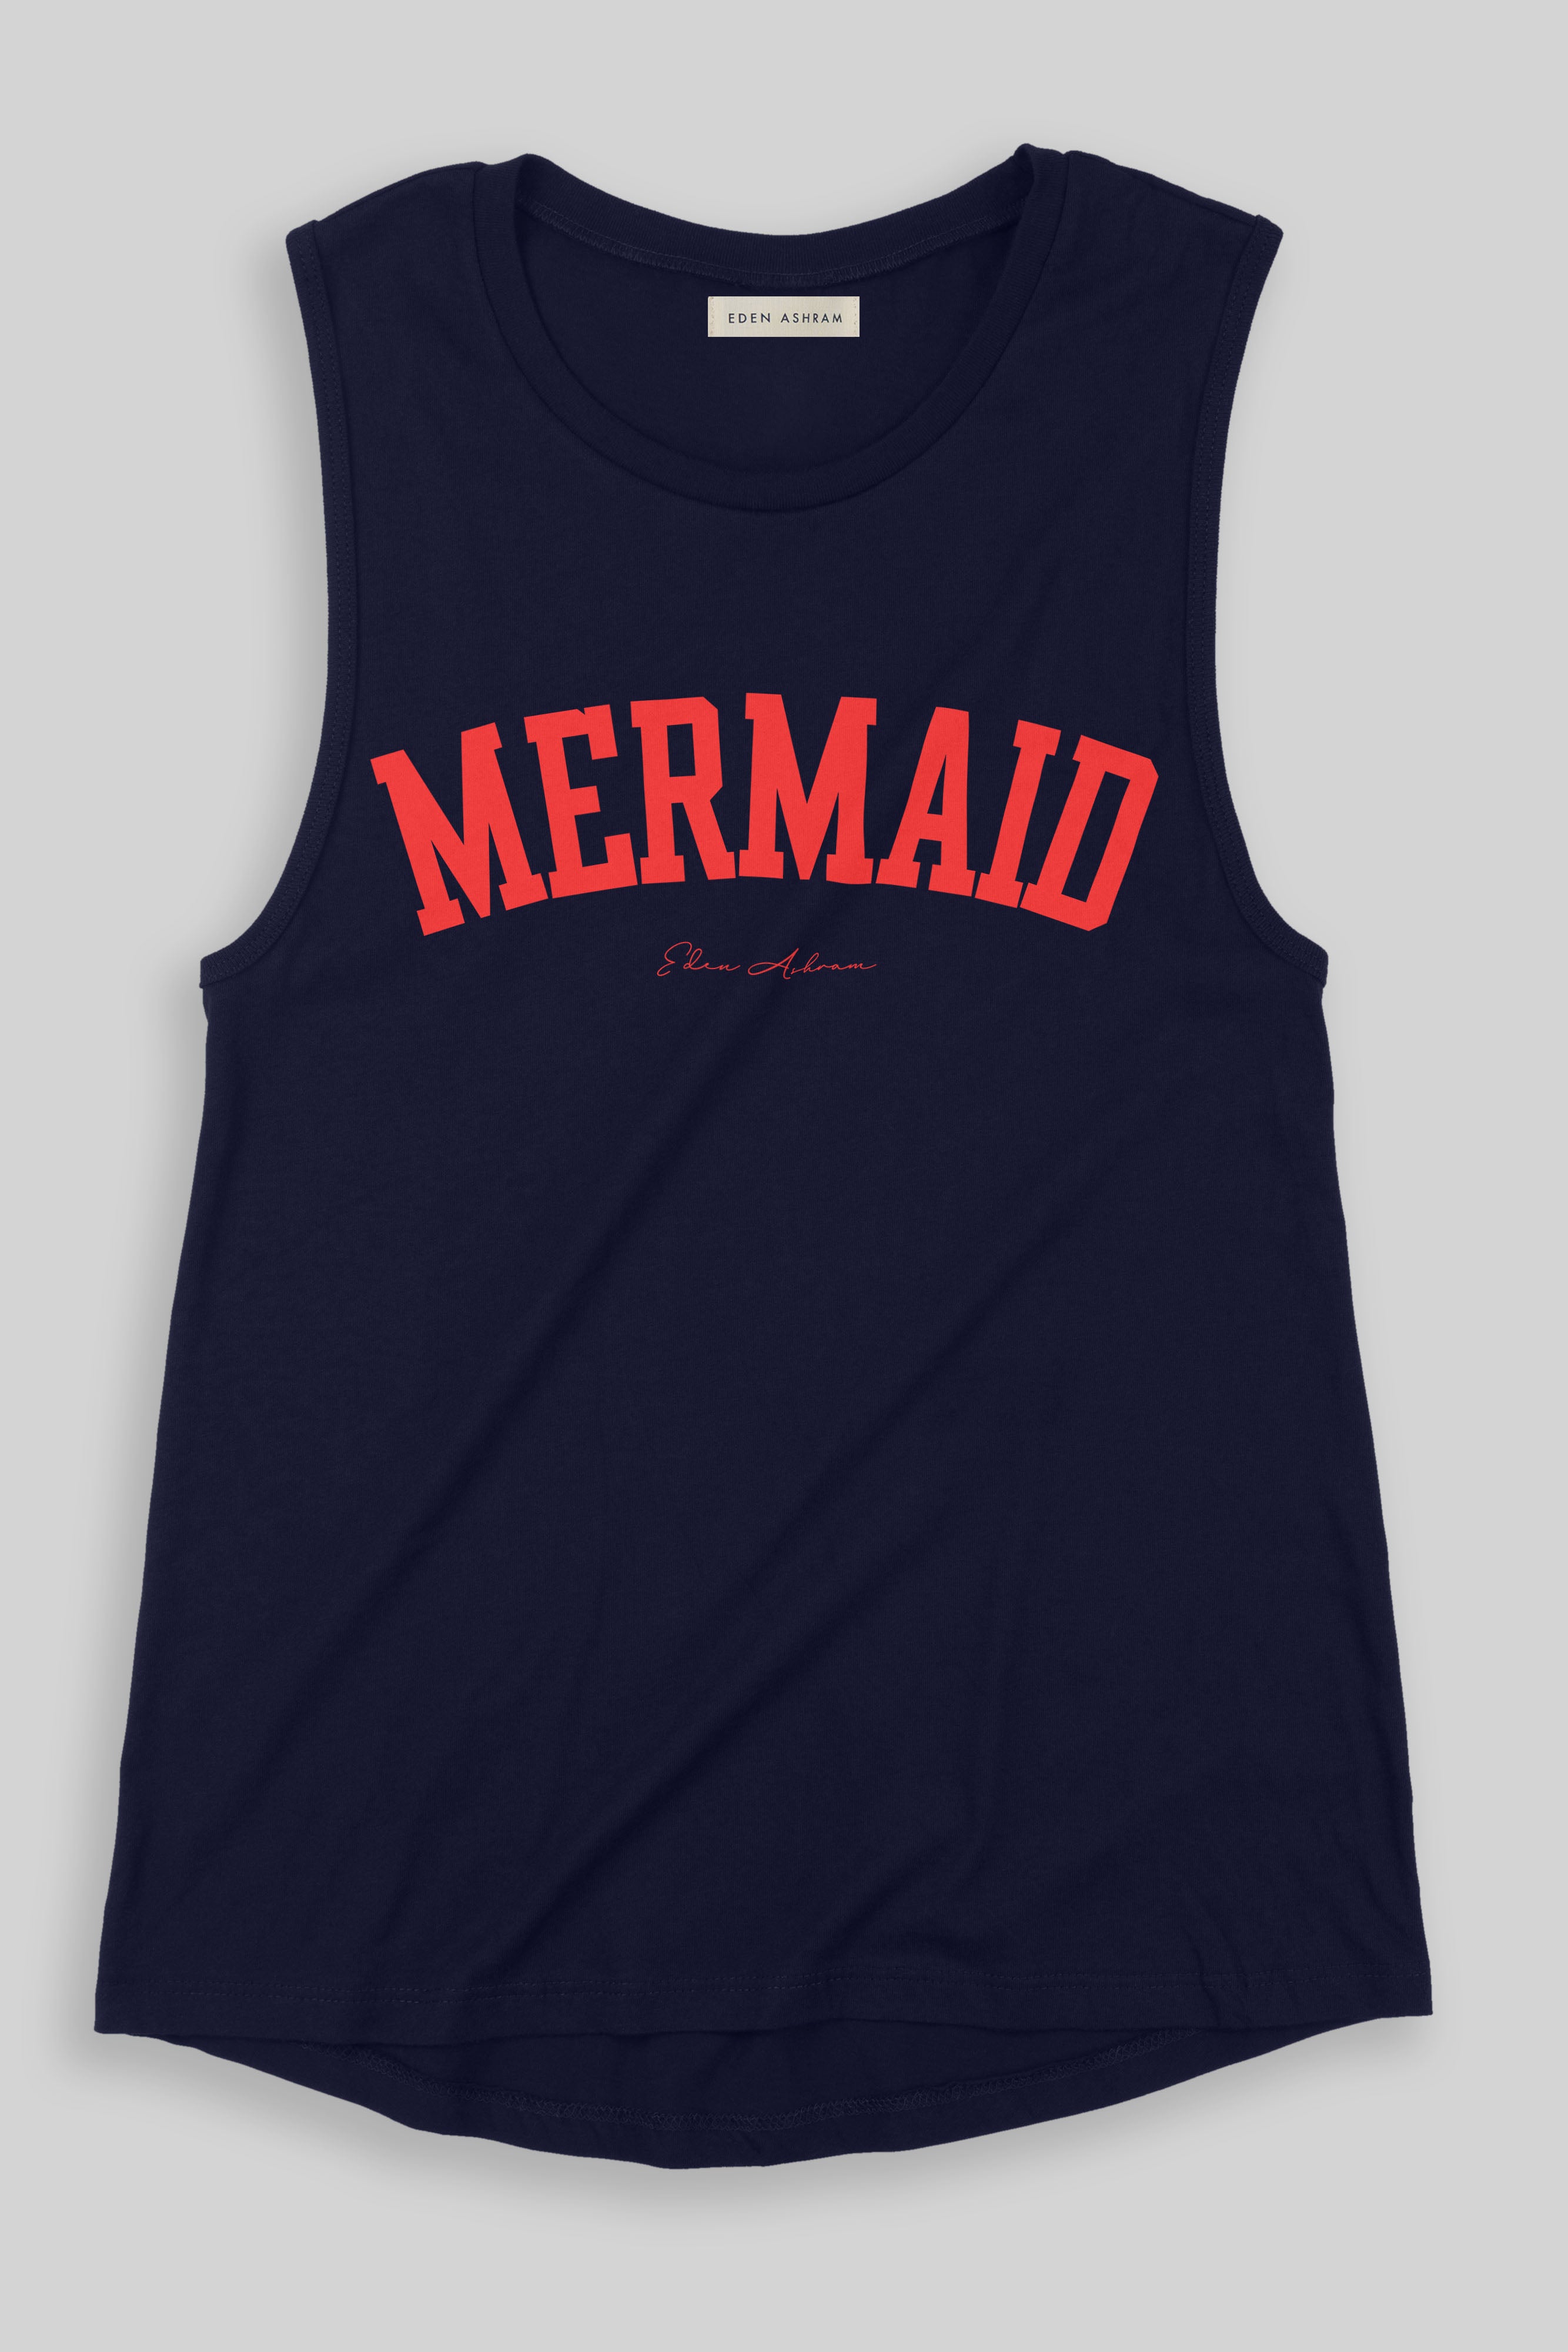 EDEN ASHRAM Mermaid Jersey Muscle Tank Navy